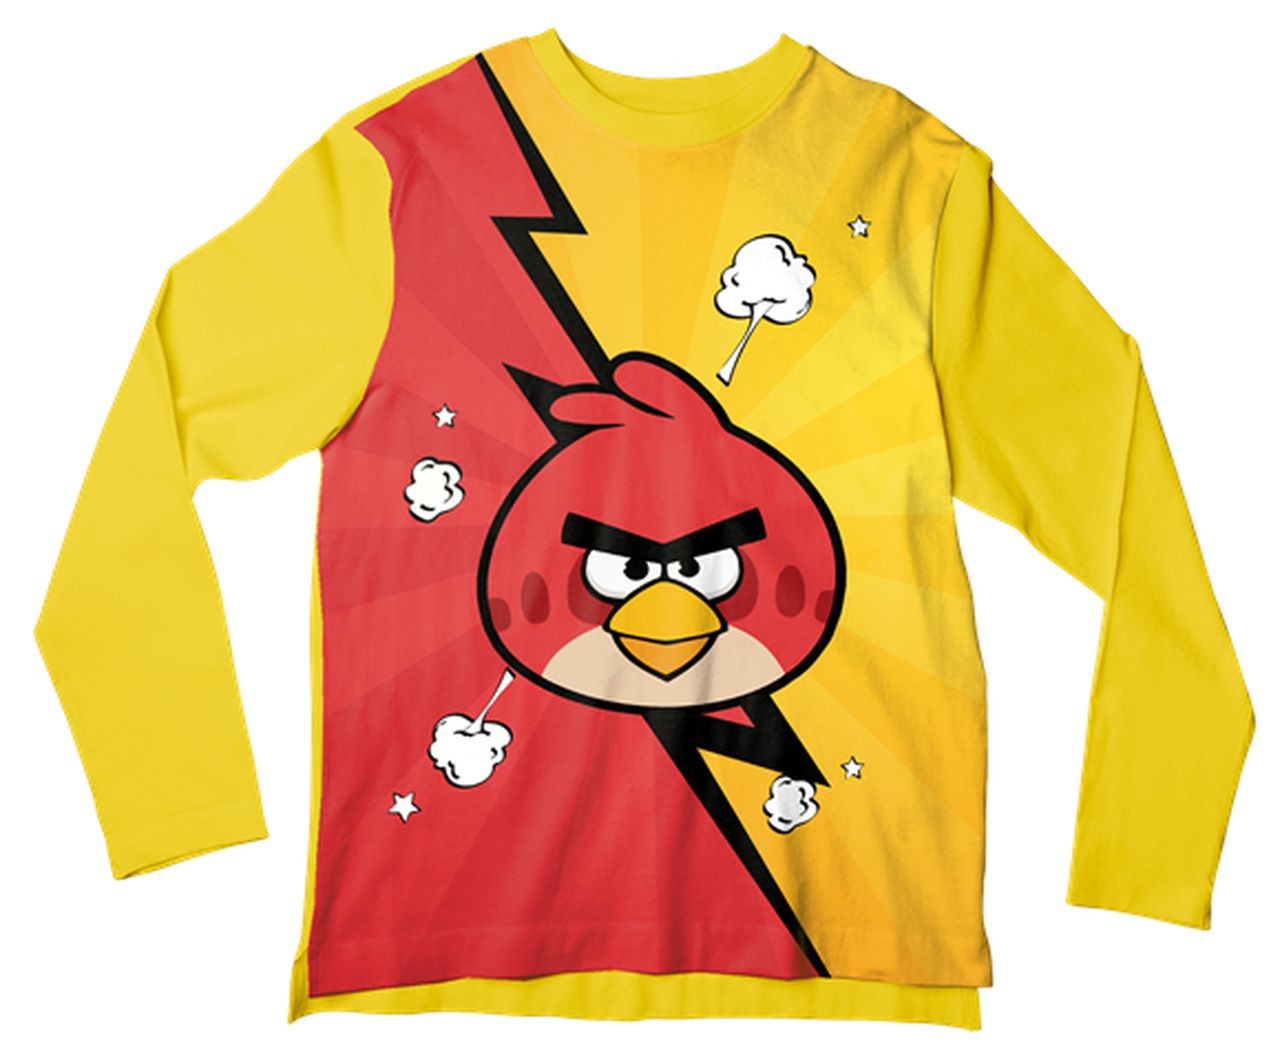 Camiseta Adulto Angry Birds Vermelho ML